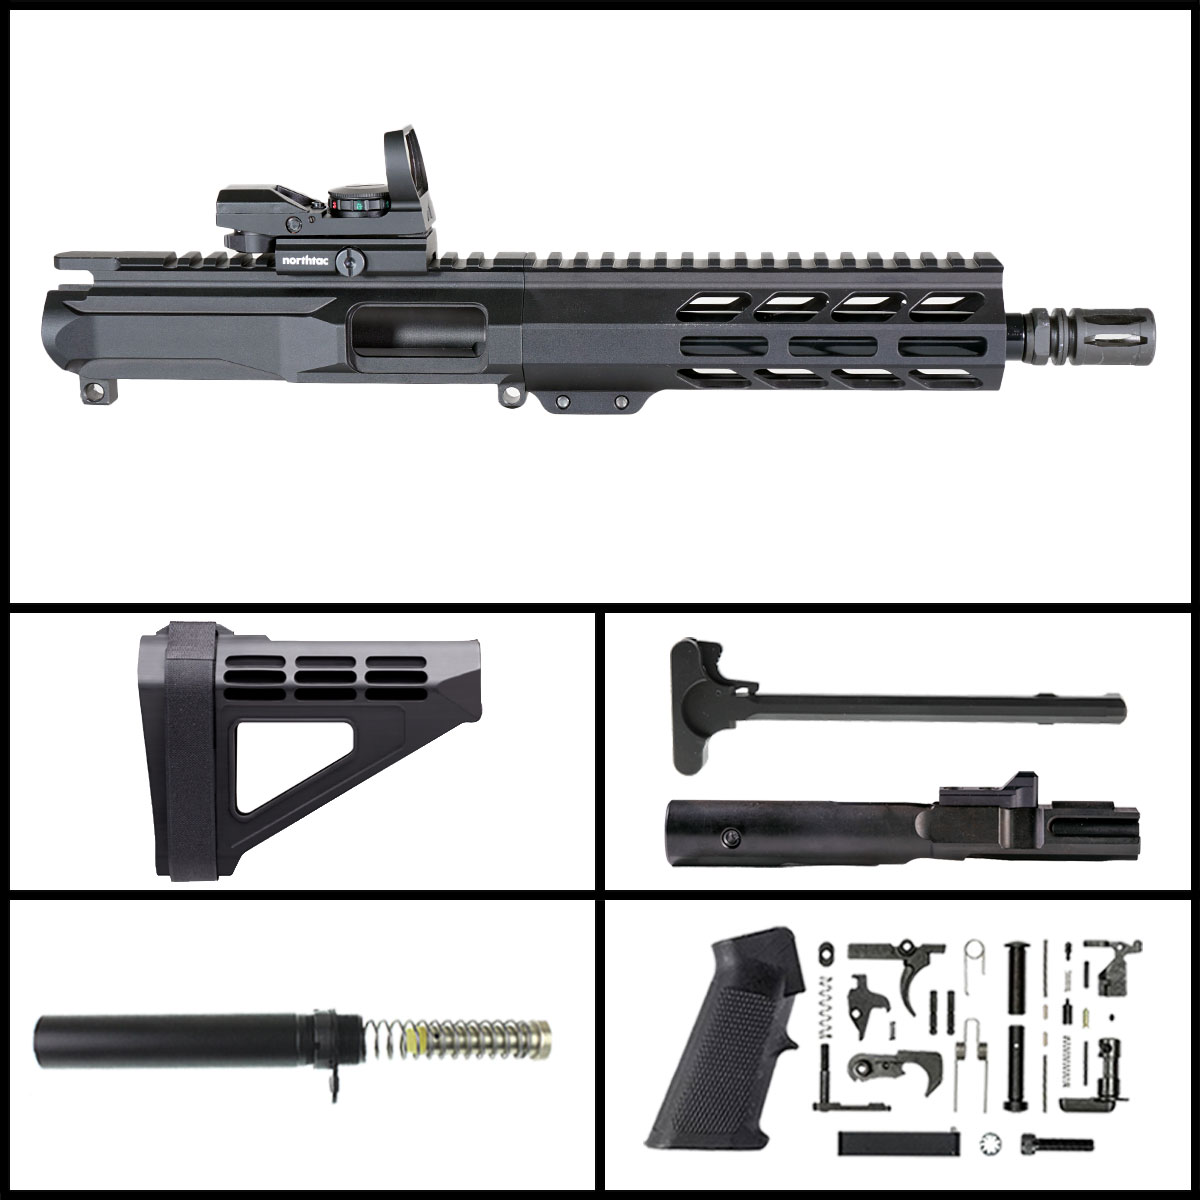 OTD 'Eternal Night Gen 2 w/ MVR' 8.5-inch AR-15 9mm Nitride Pistol Full Build Kit